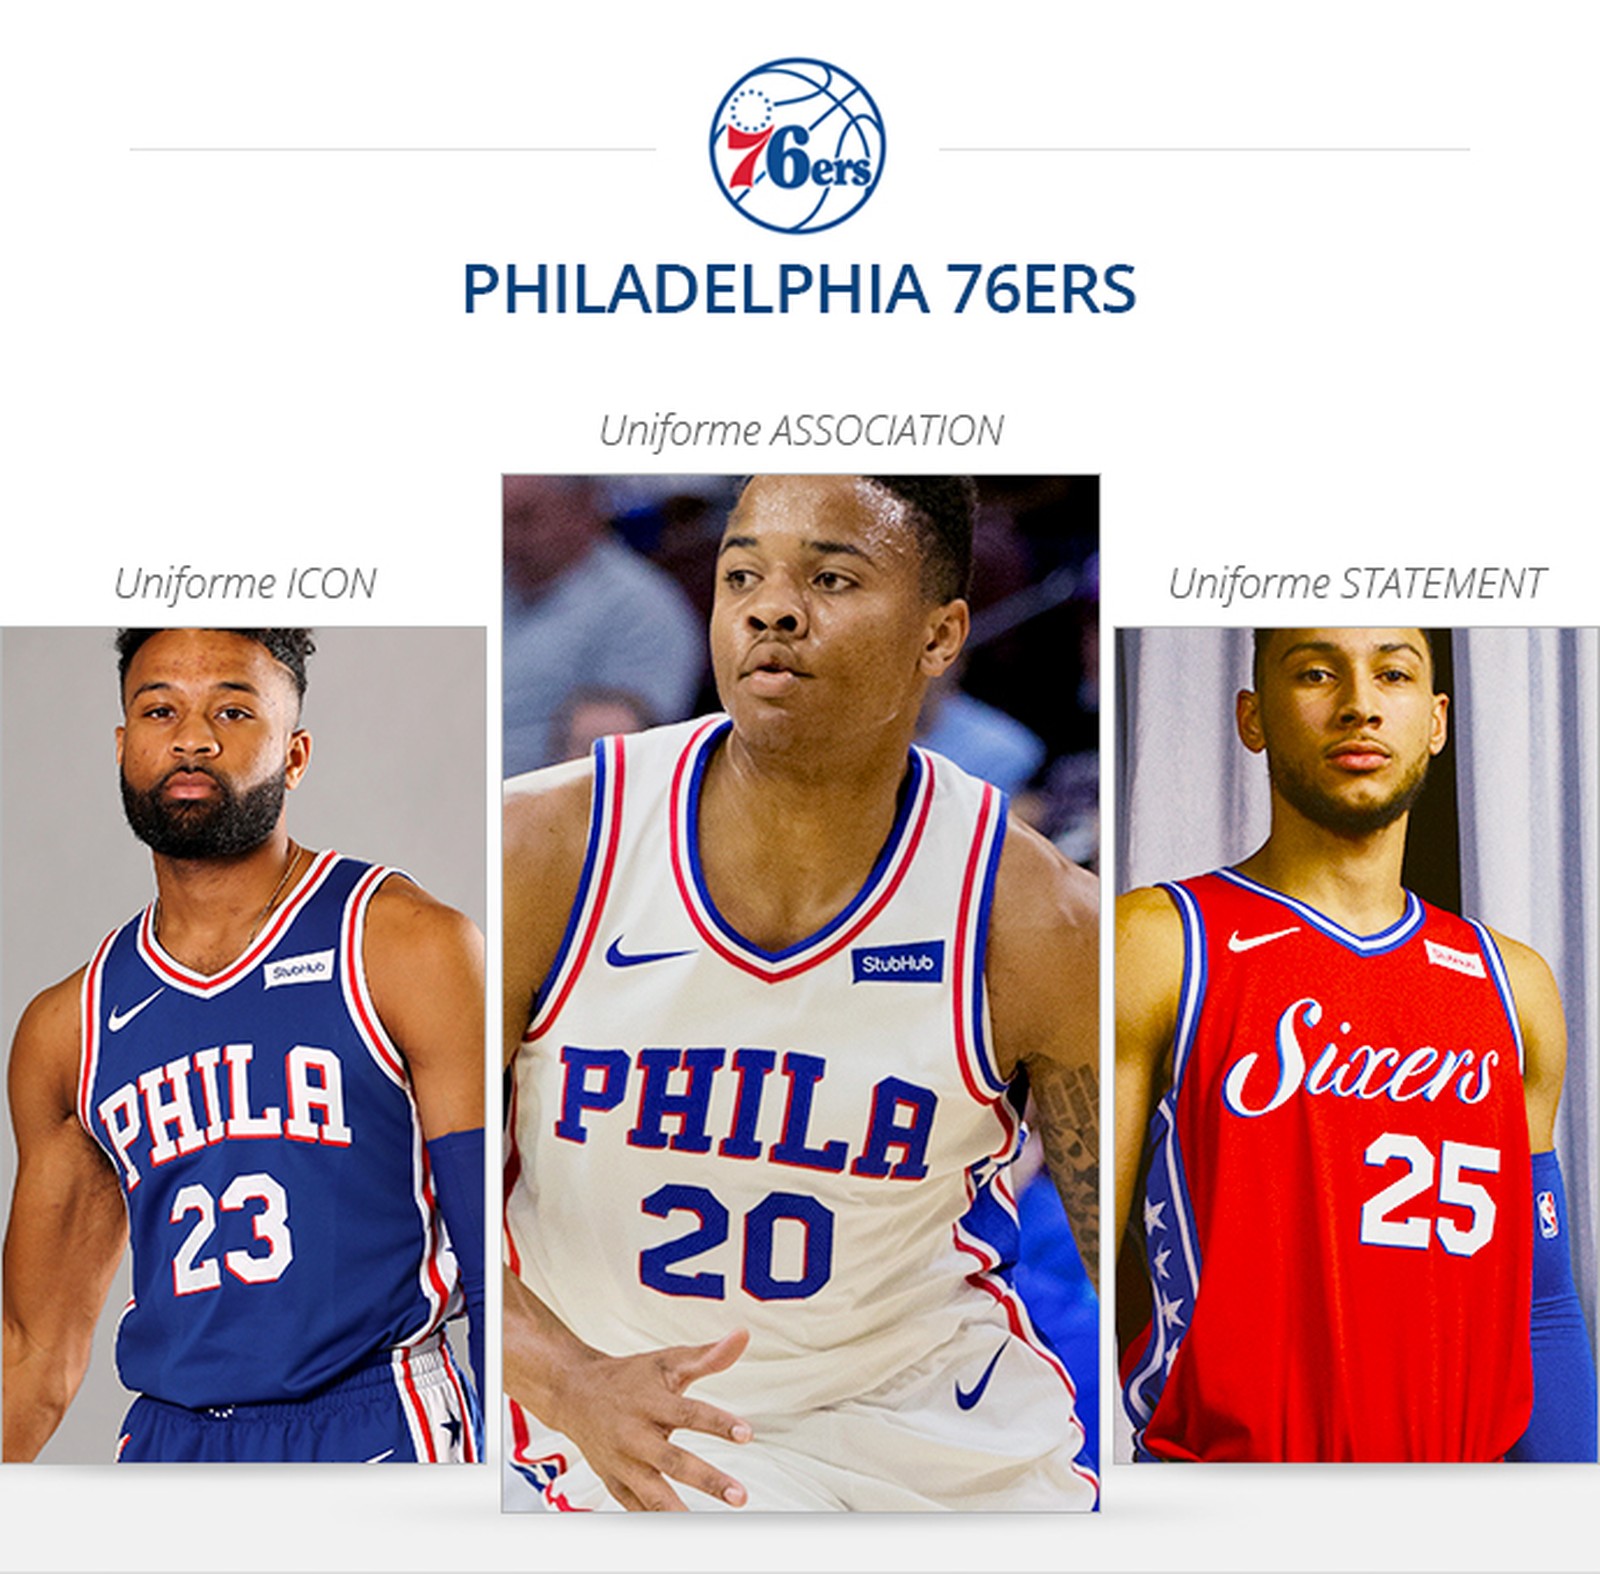 Uniformes Philadelphia 76ERS saison 2017/18